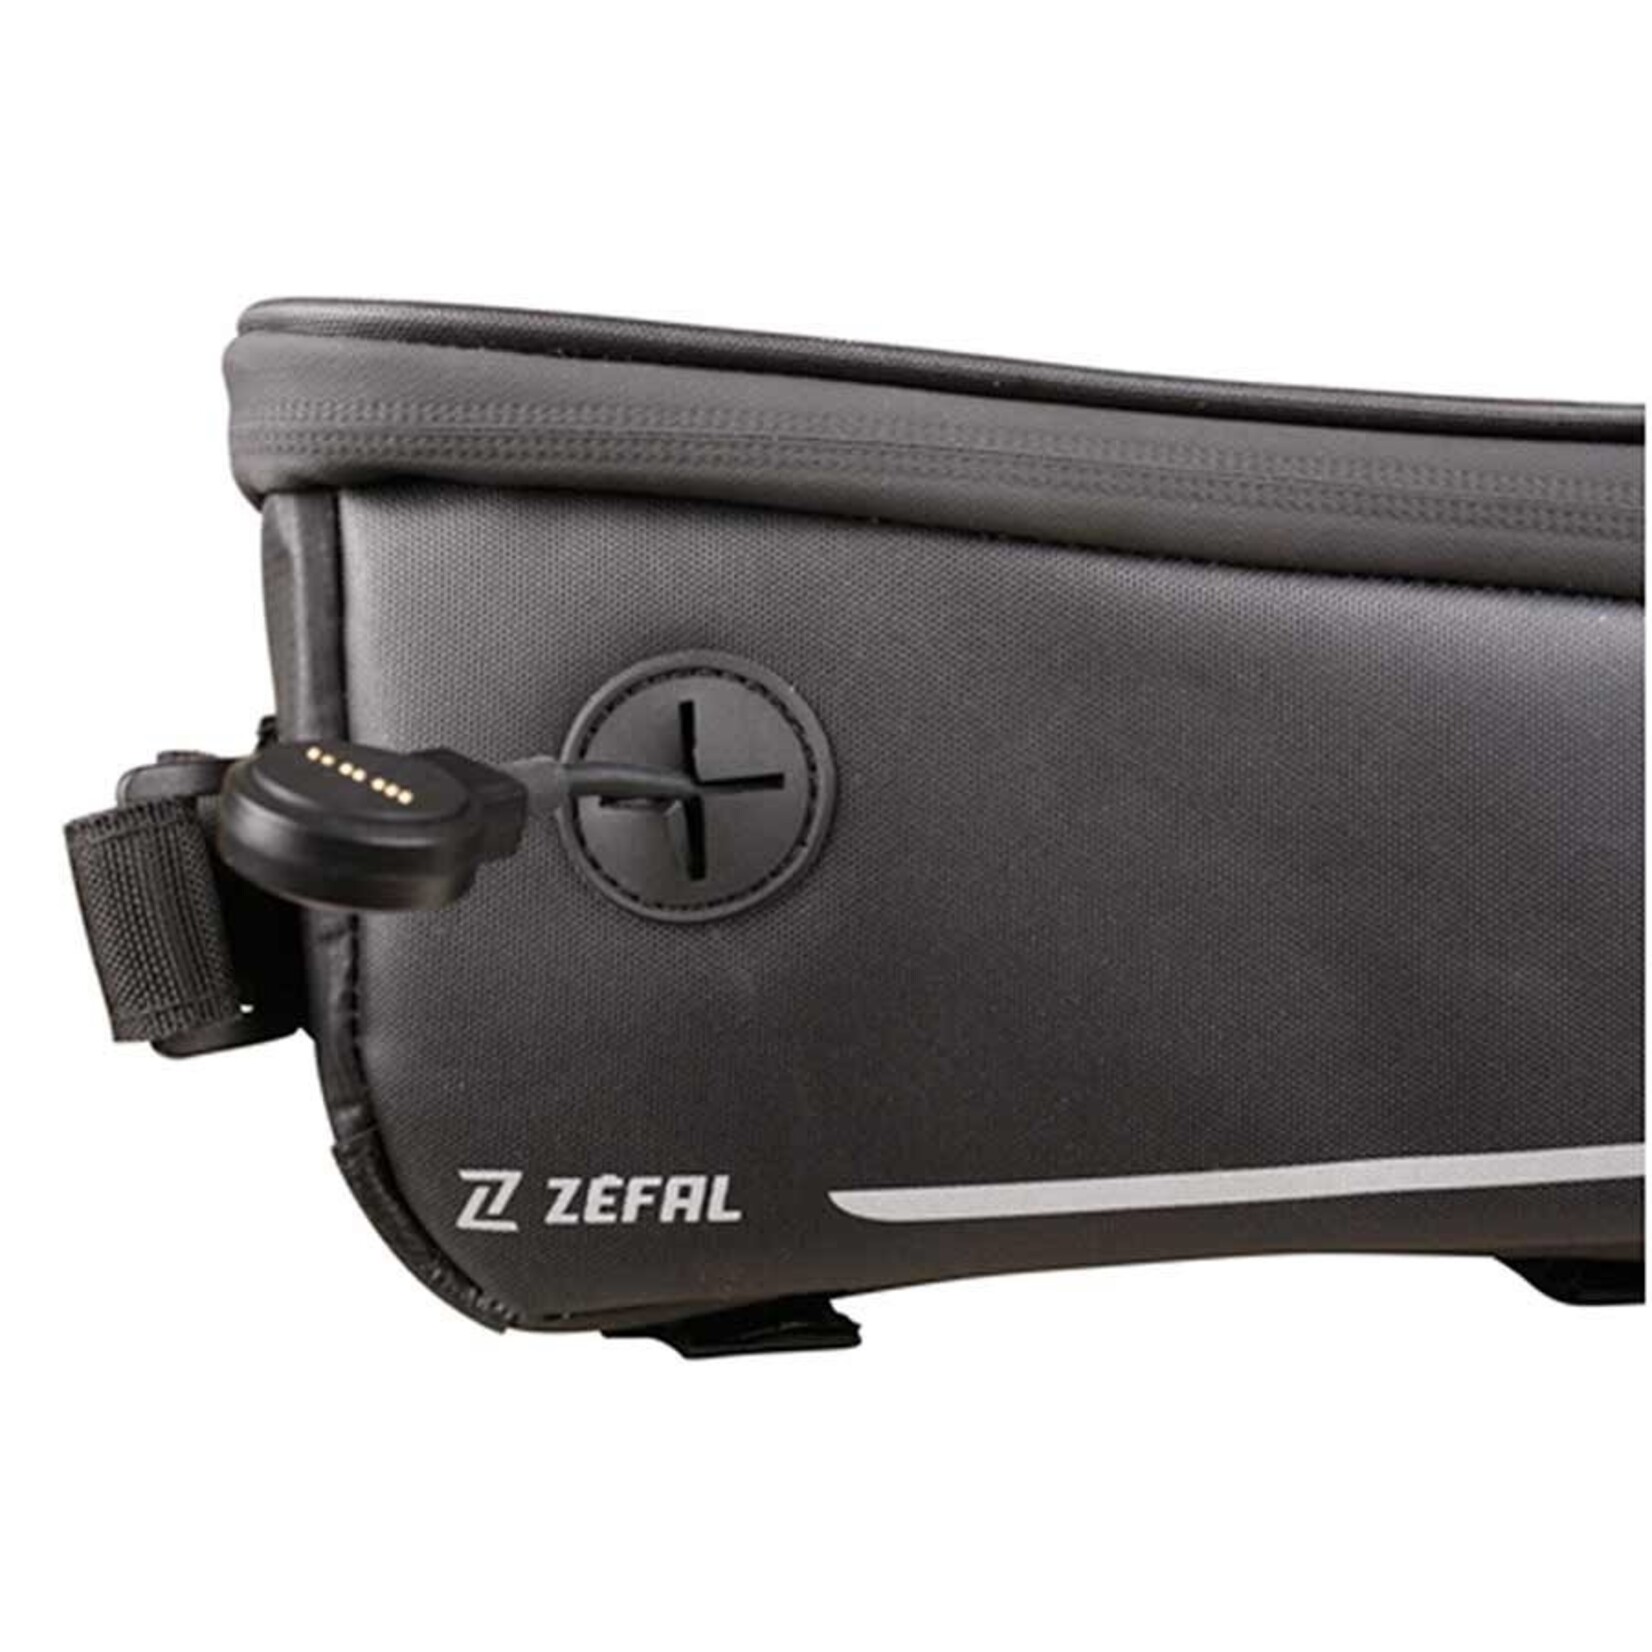 Zefal, Z Console Pack T2, Top Tube Bags, 1.3L, Black